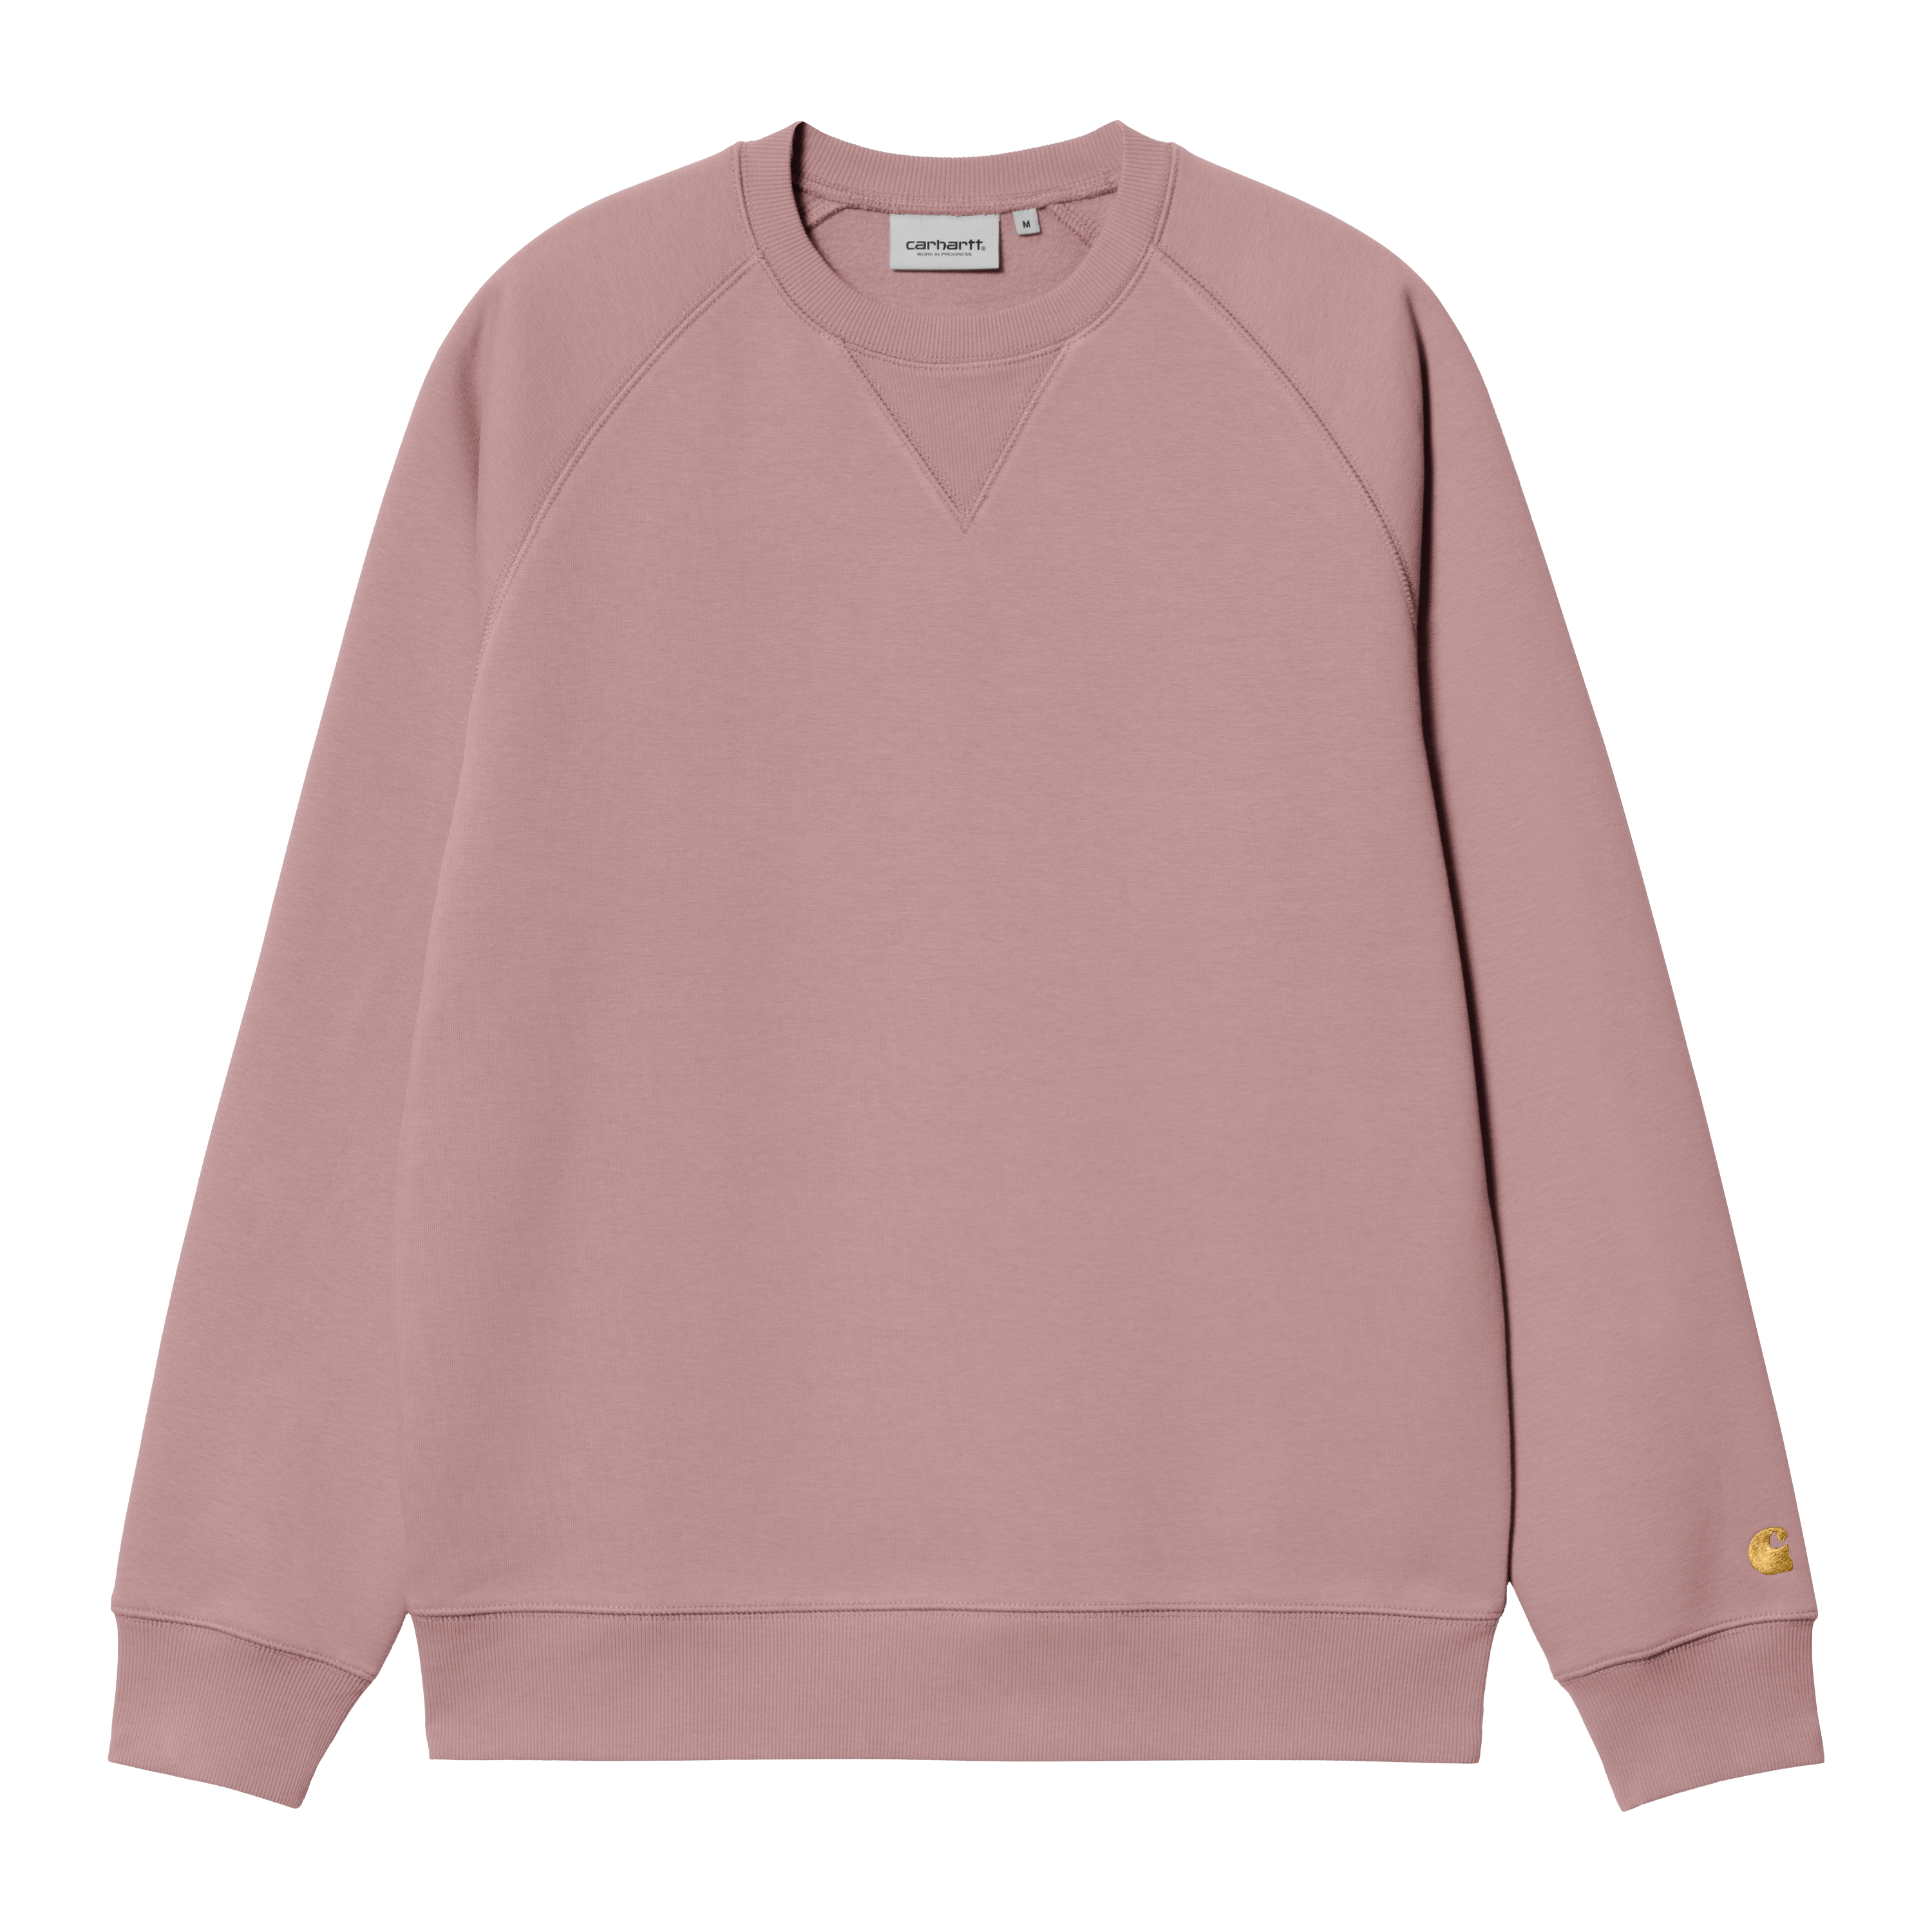 Carhartt WIP Chase Sweatshirt in Pink